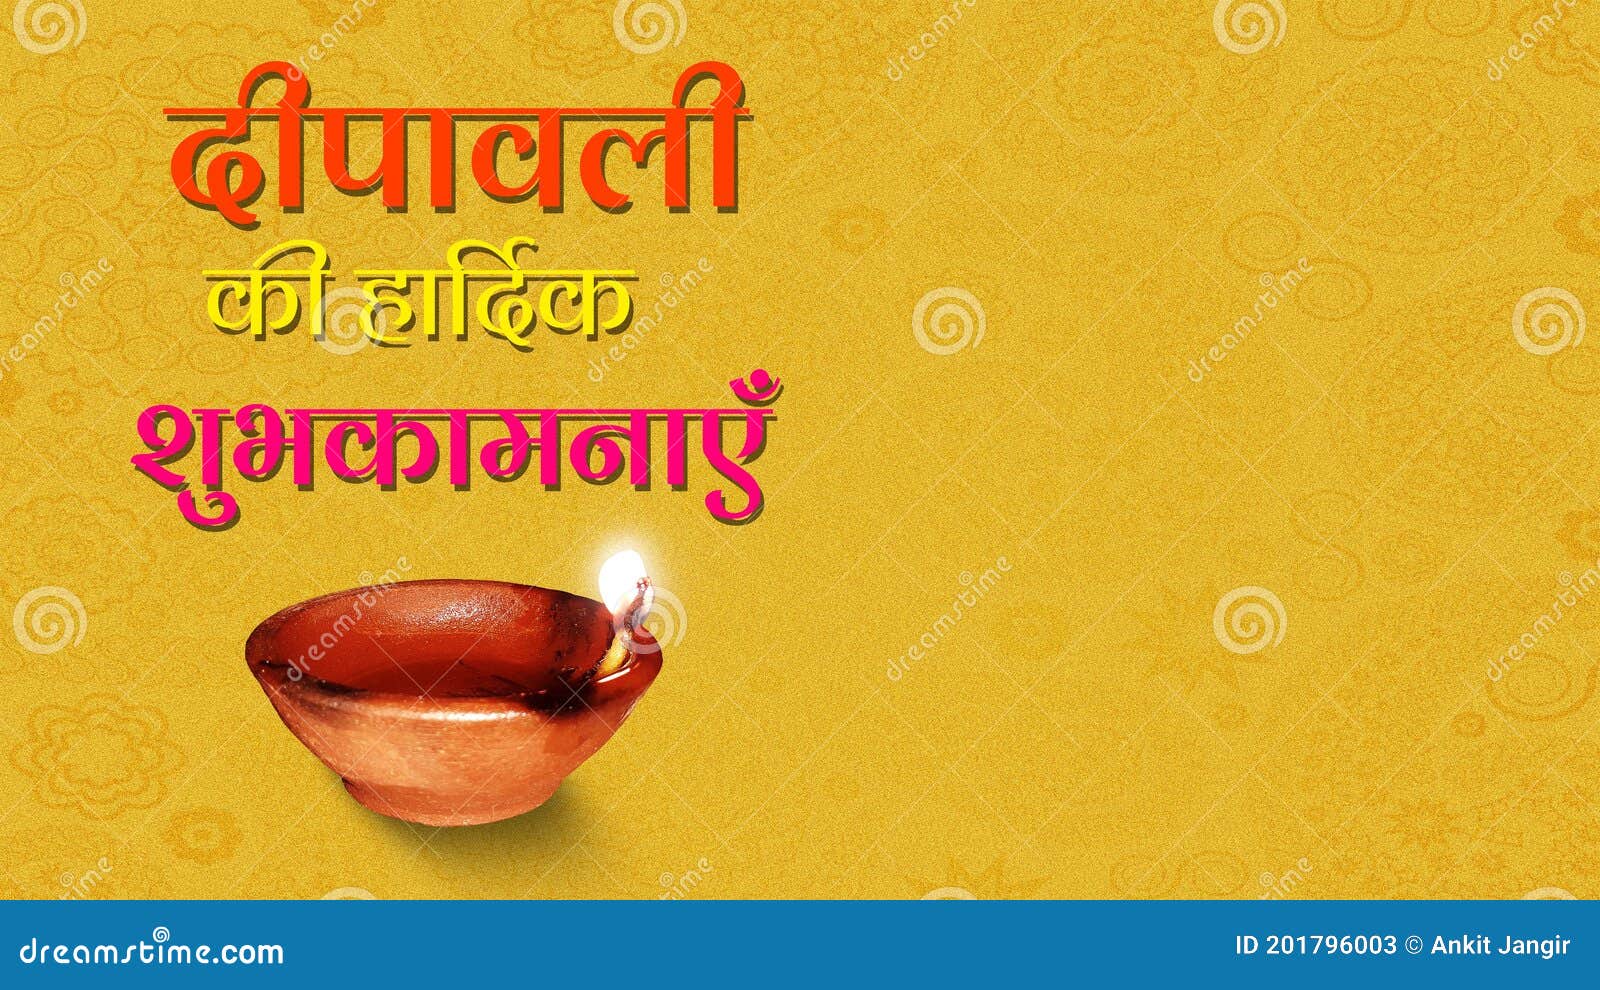 Happy Diwali Hindi Designer Text with Illuminated Clay Lamp Background  Stock Image - Image of designer, golden: 201796003